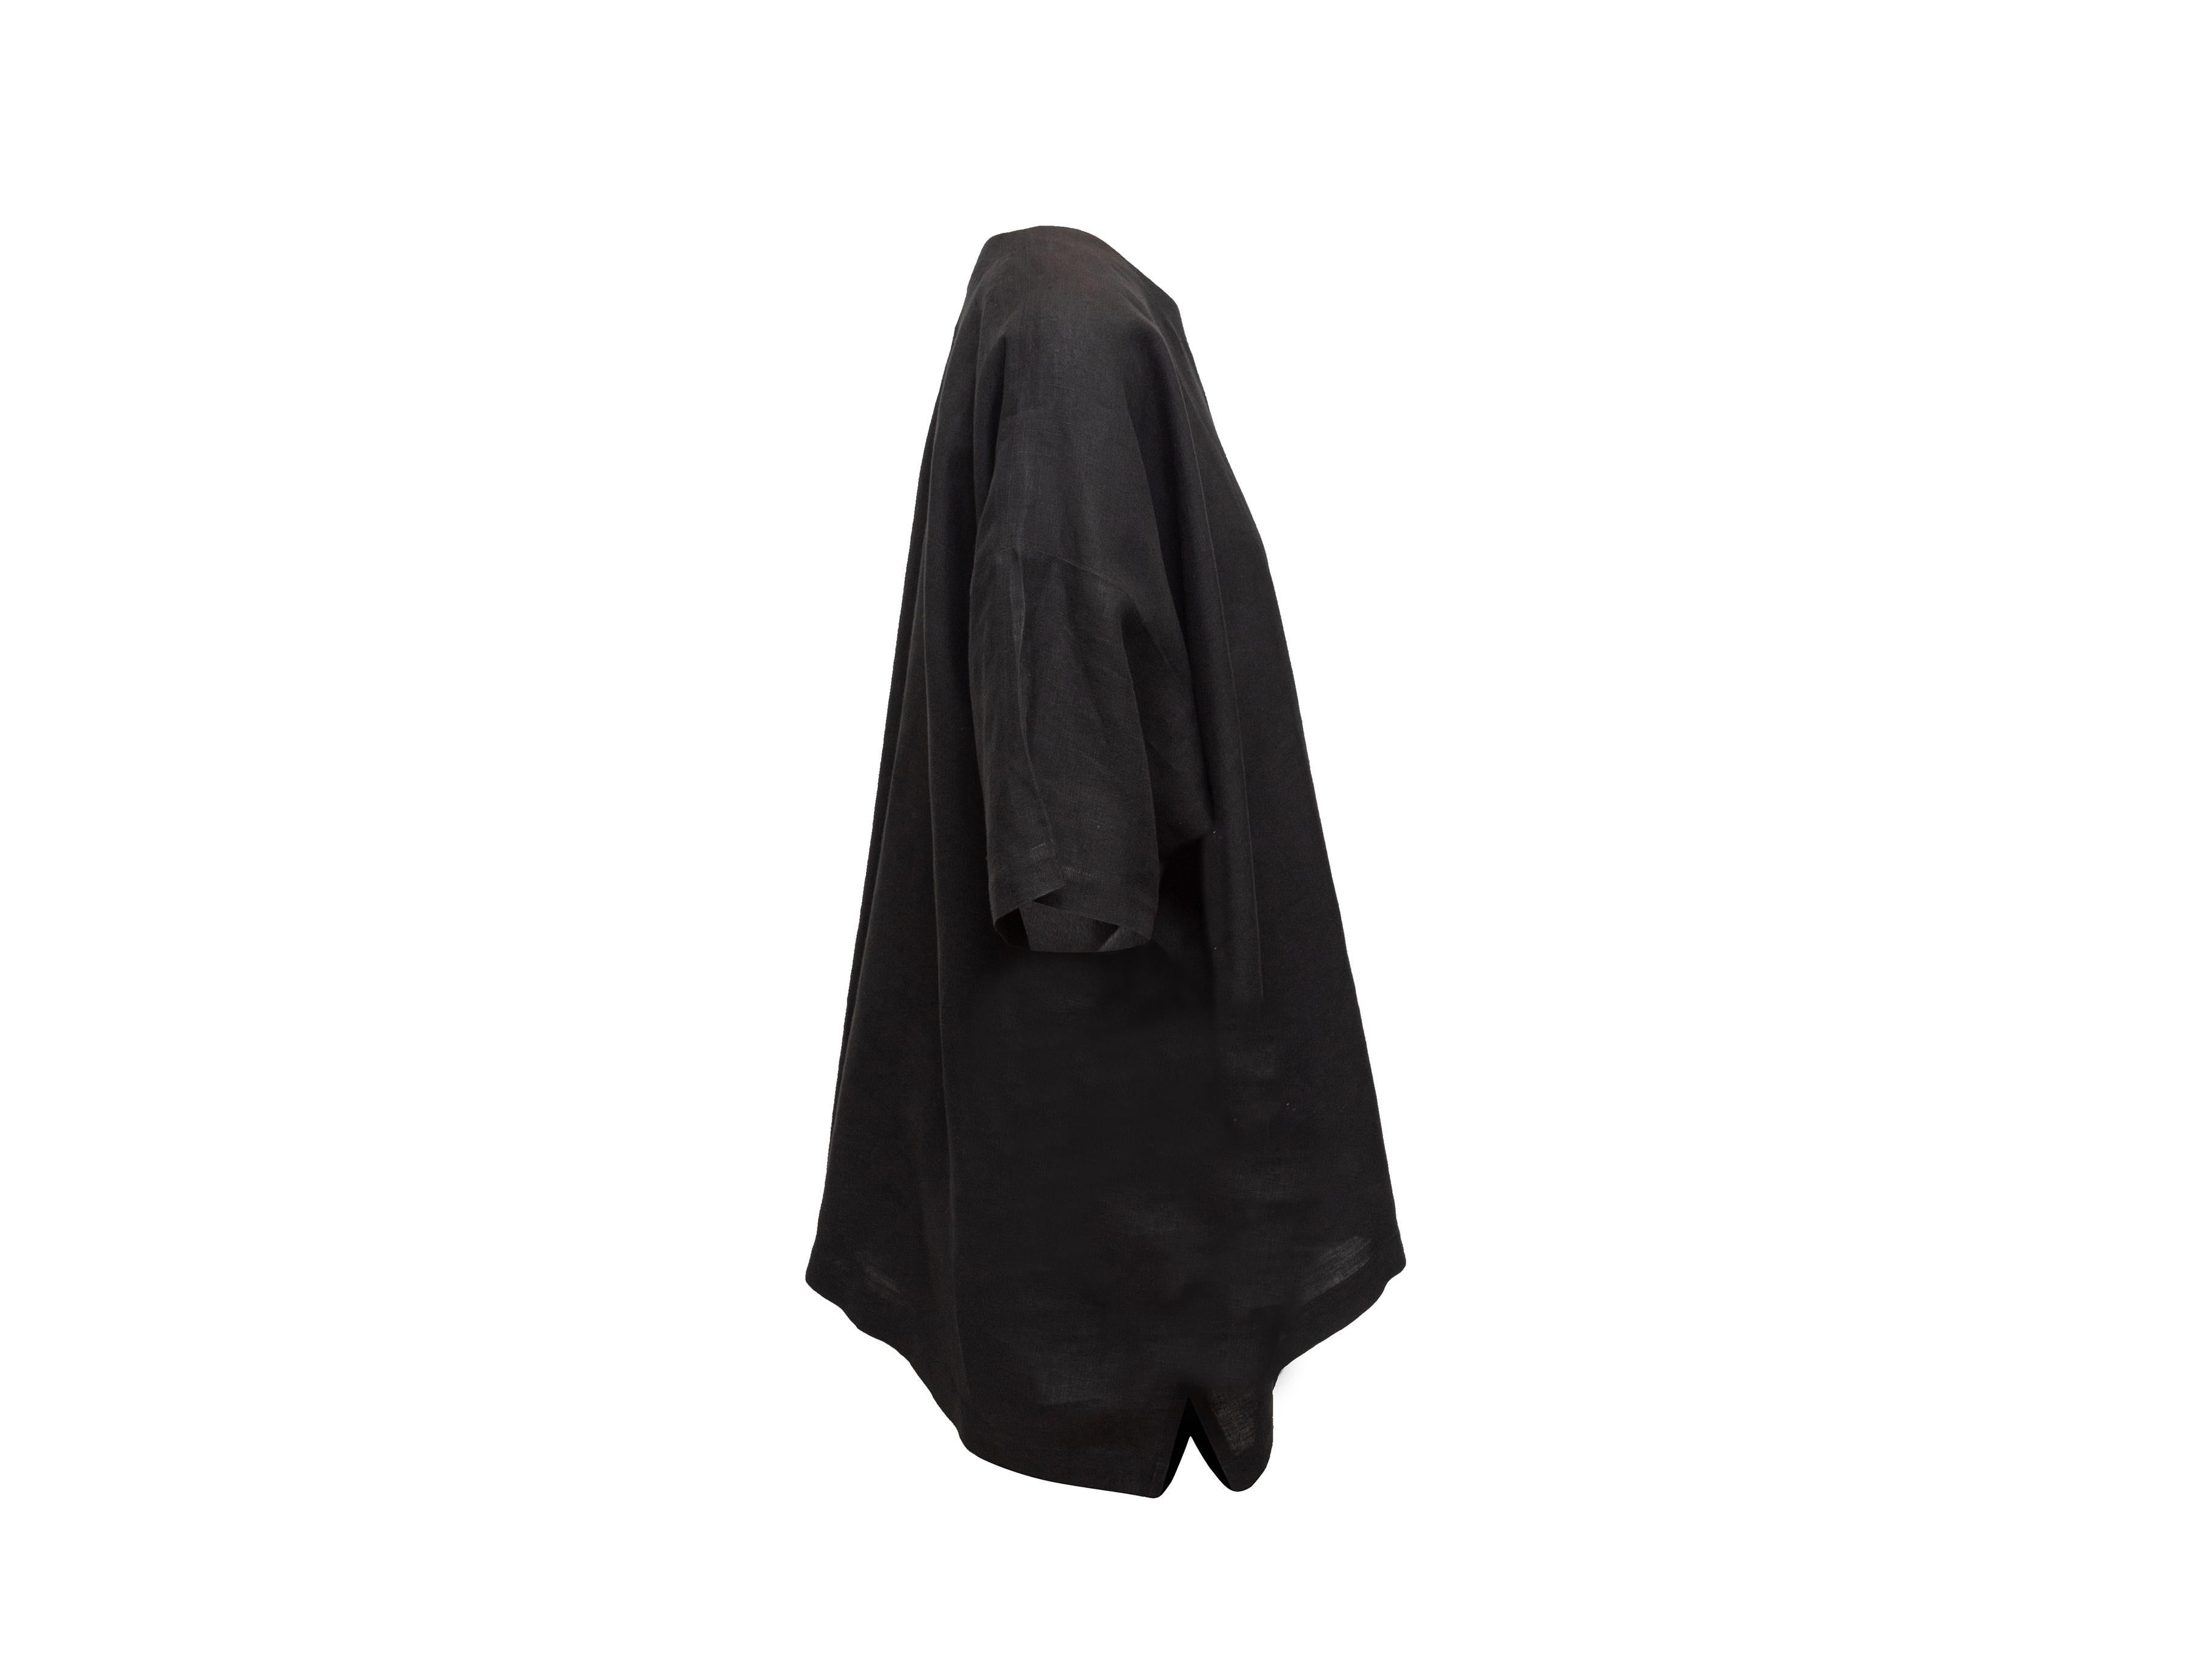 Product details: Black linen oversized top by Eskandar. Crew neck. Short sleeves. Button closures at shoulder. 64